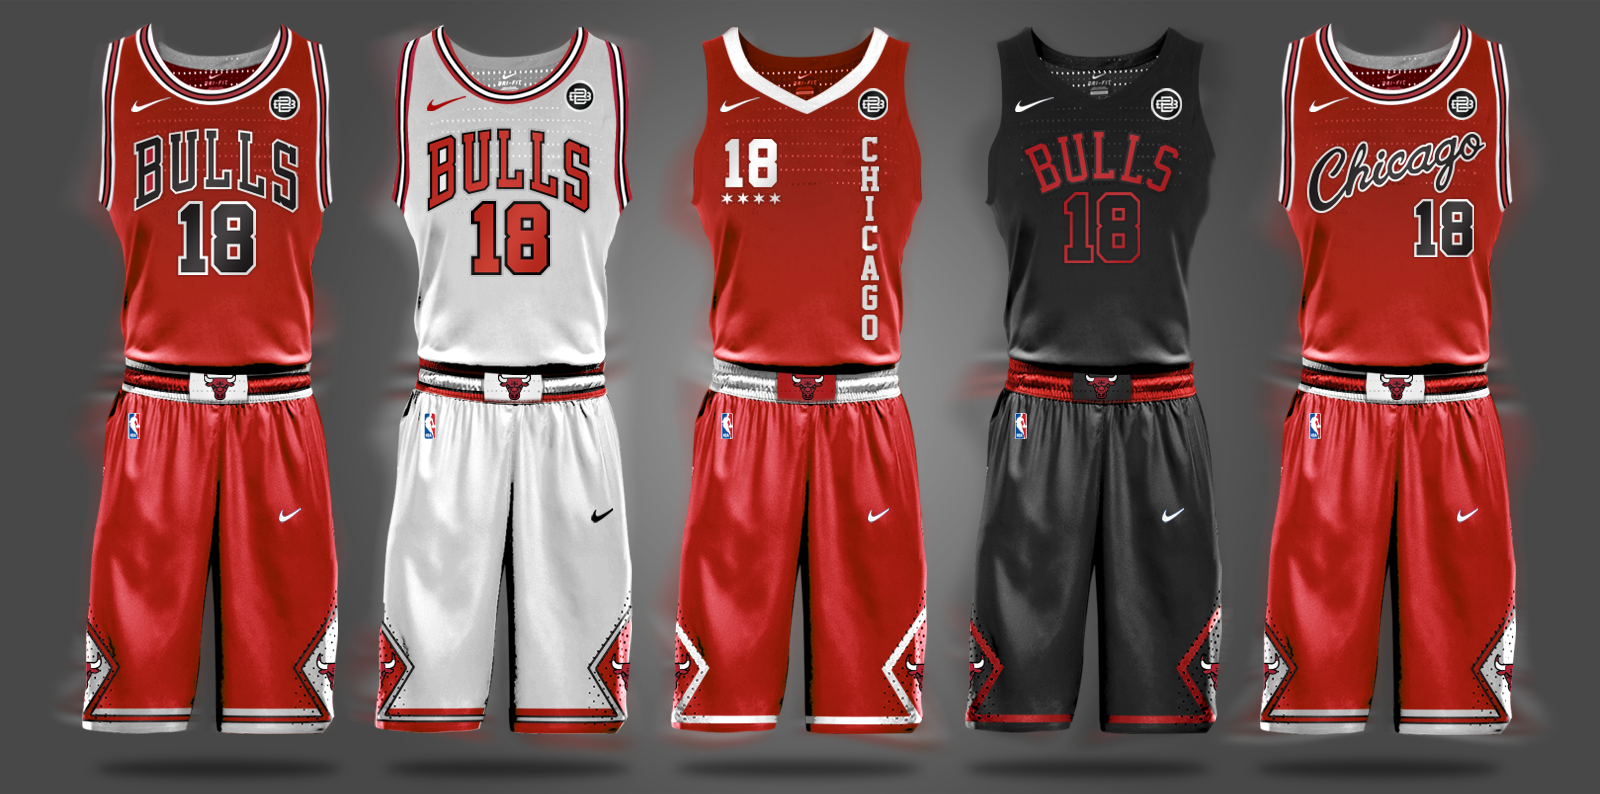 2018 bulls jersey